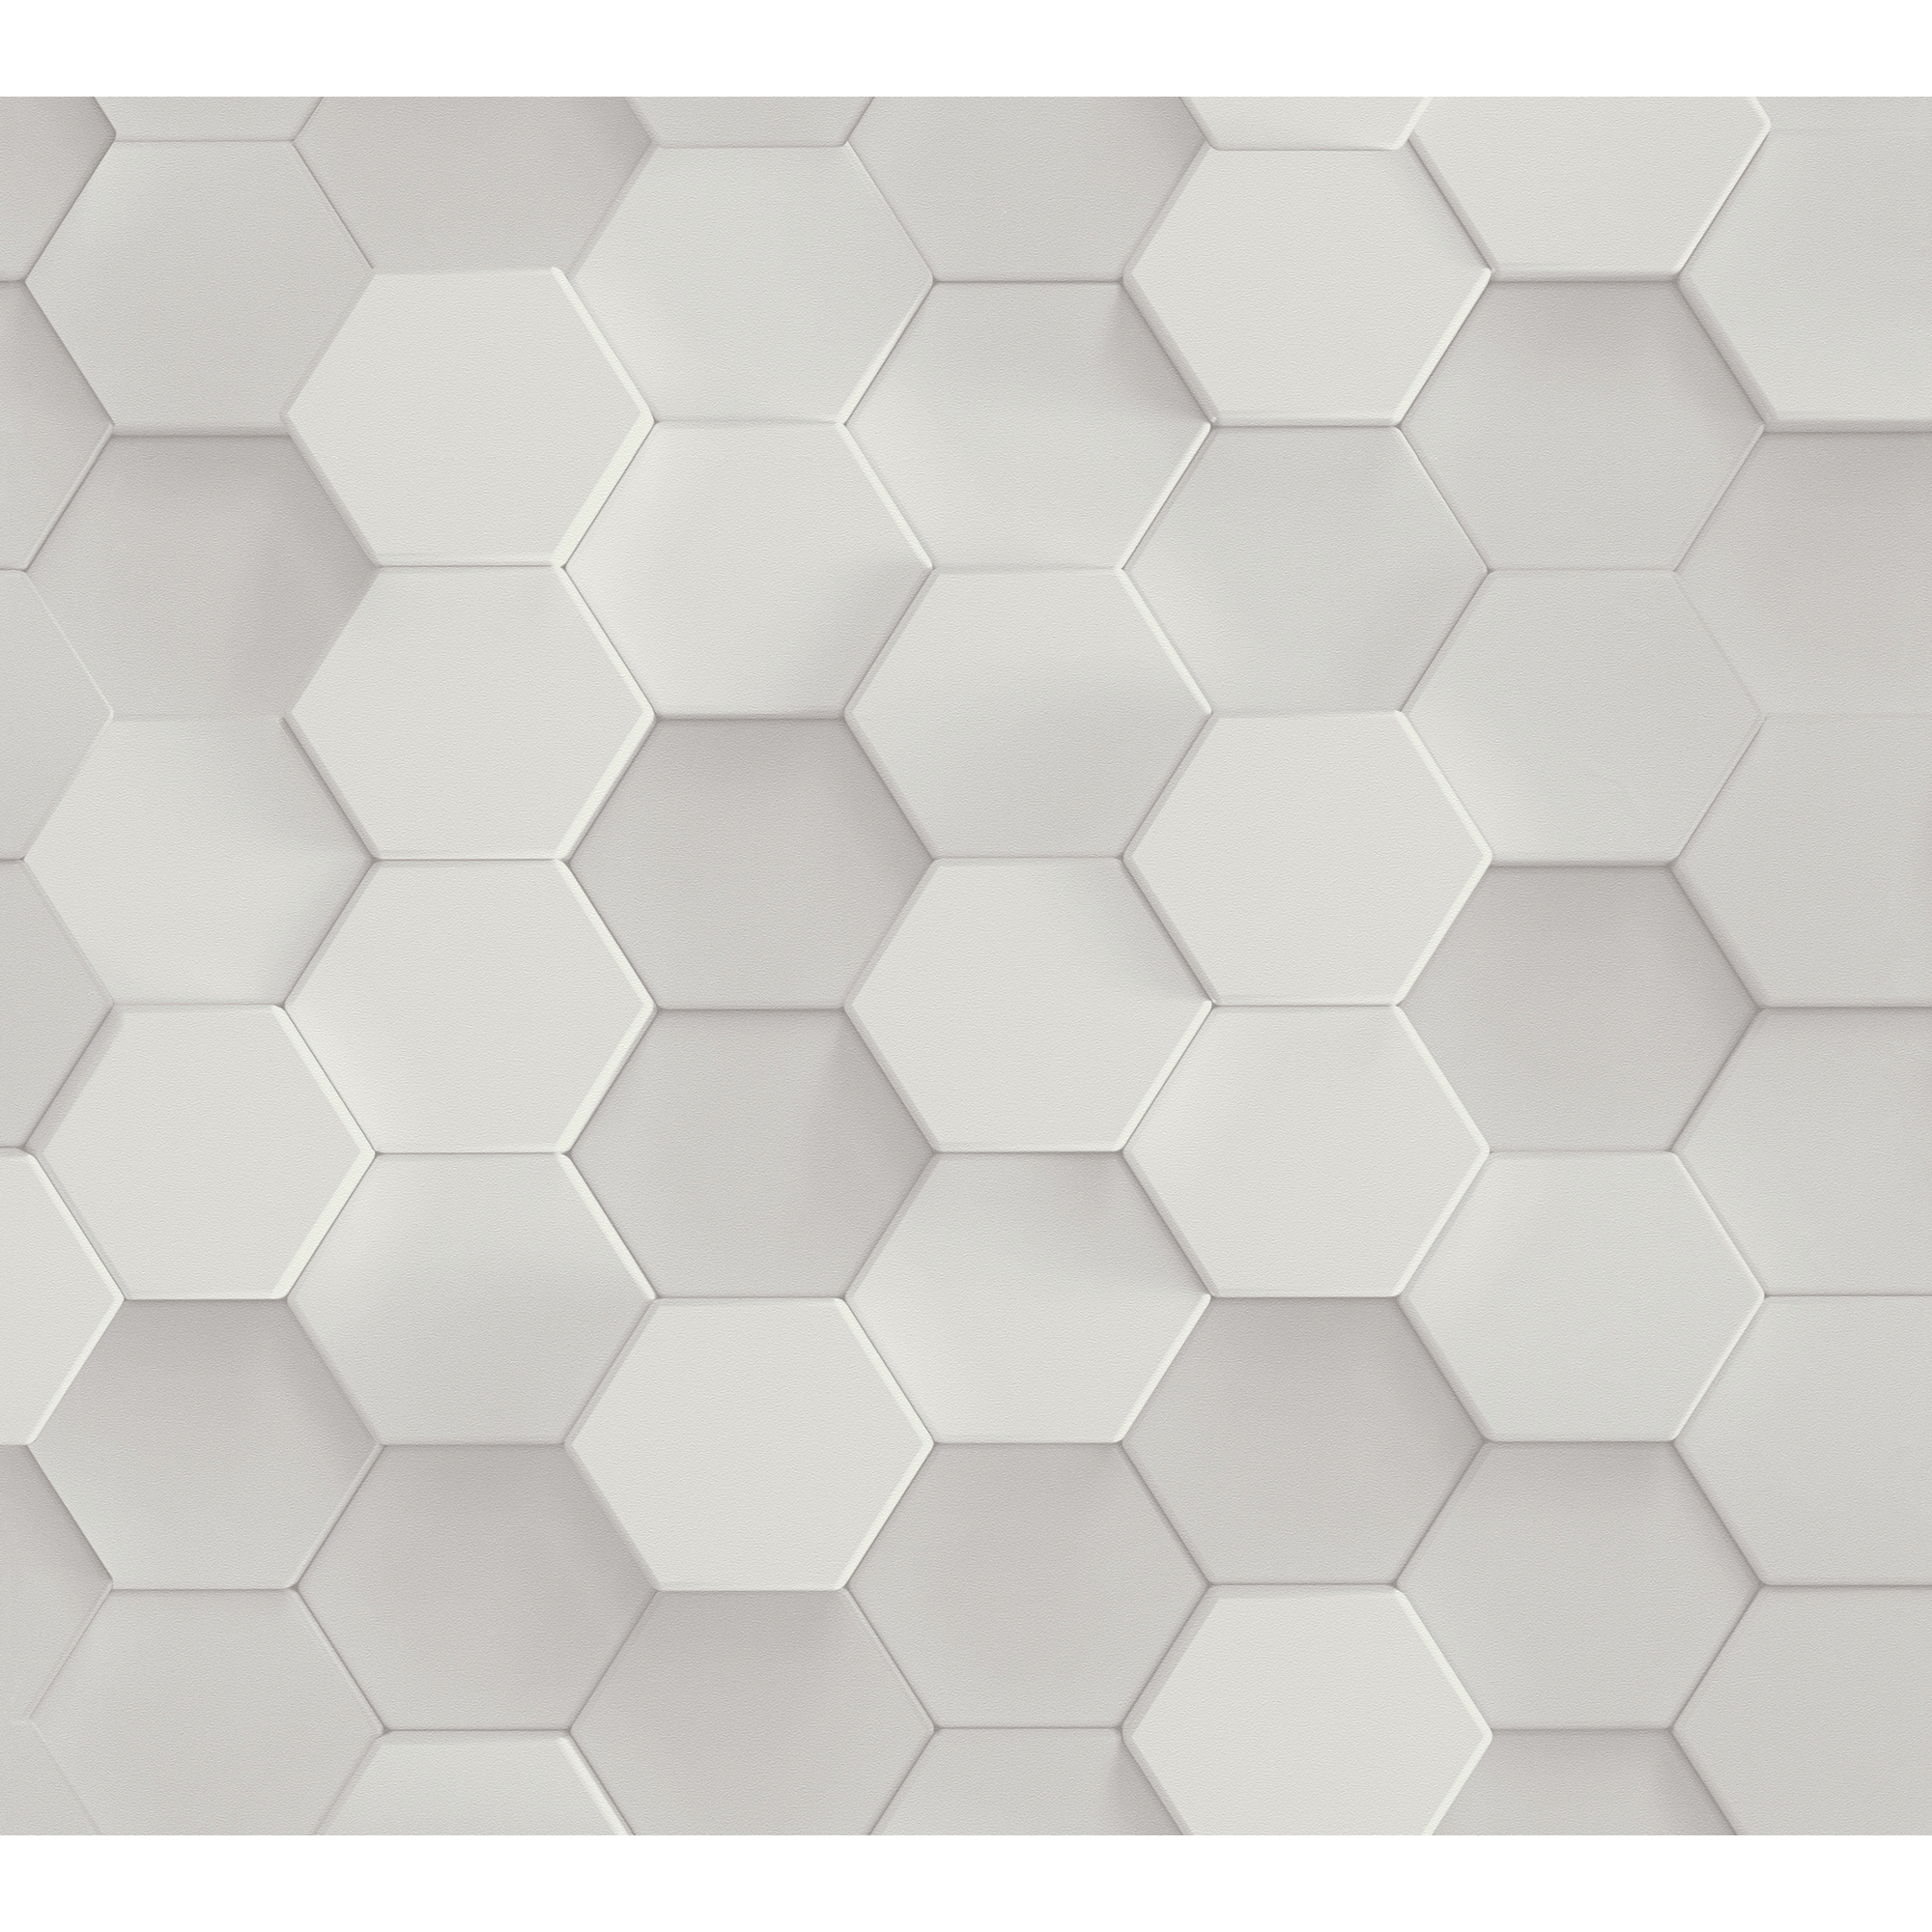 Vliestapete 'Pint Walls' Wabenmuster 3D grau/weiß 10,05 x 0,53 m + product picture